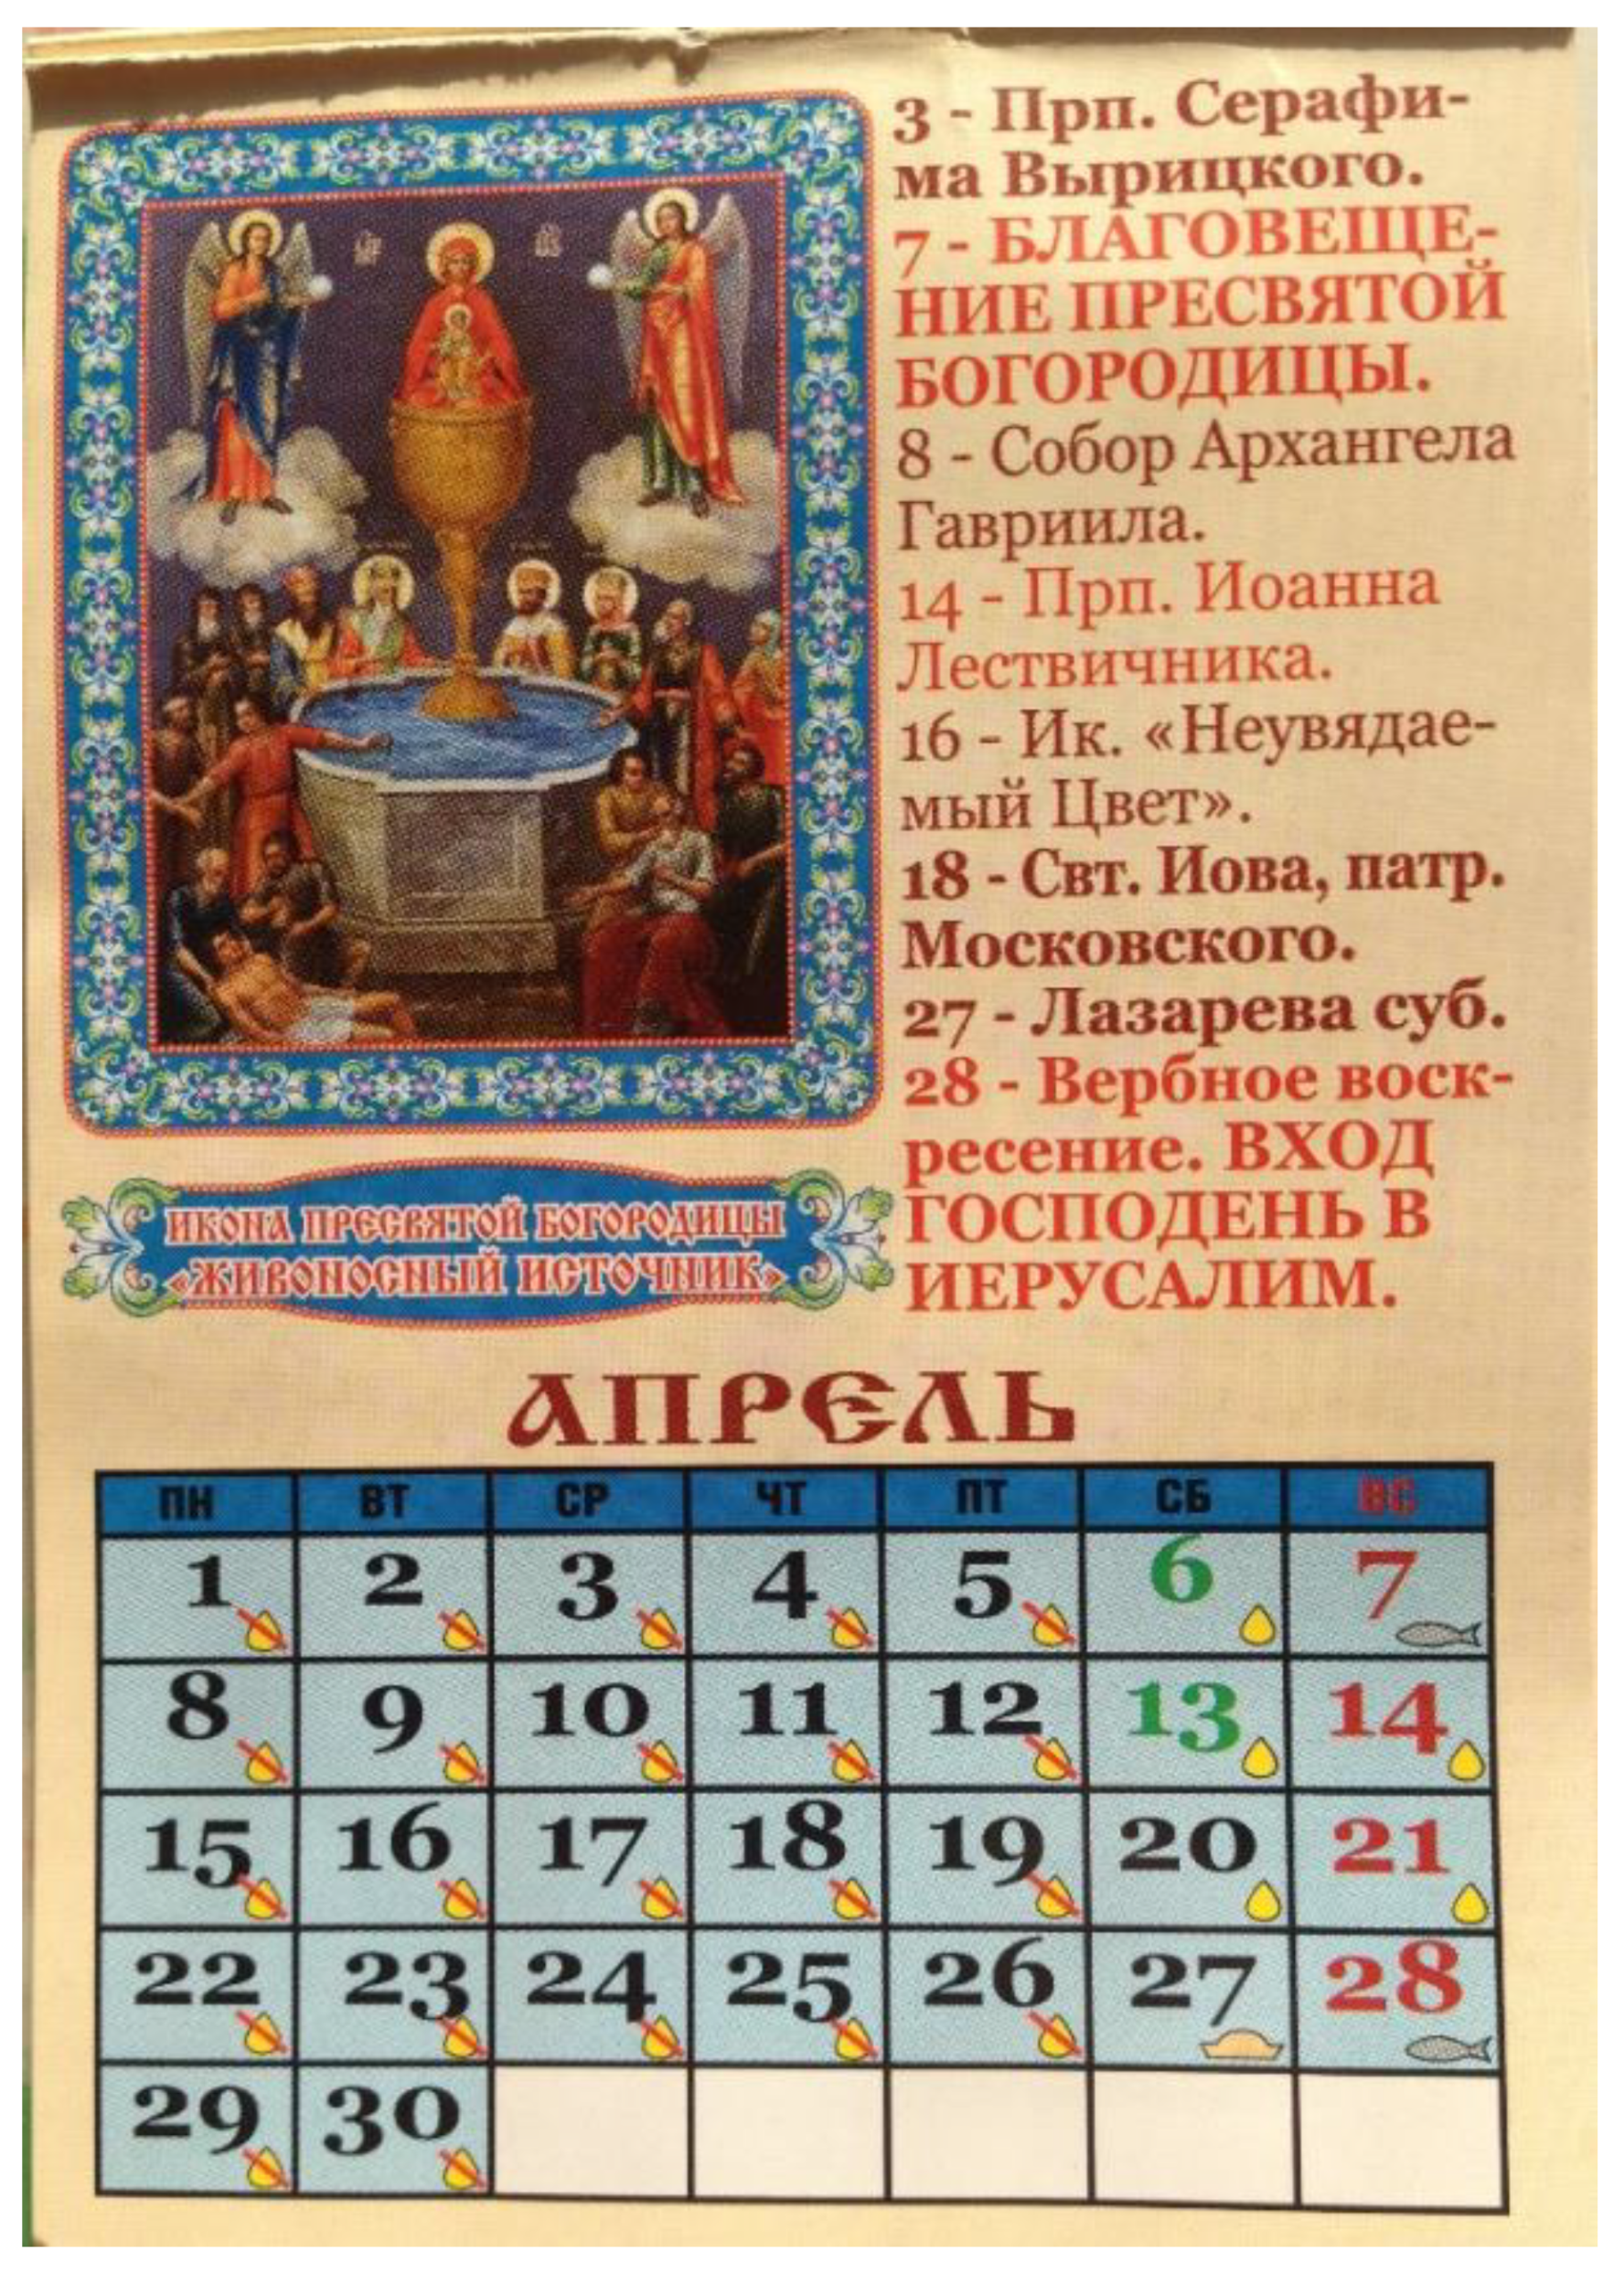 greek orthodox fasting calendar 2021 pdf monitoring solarquest in